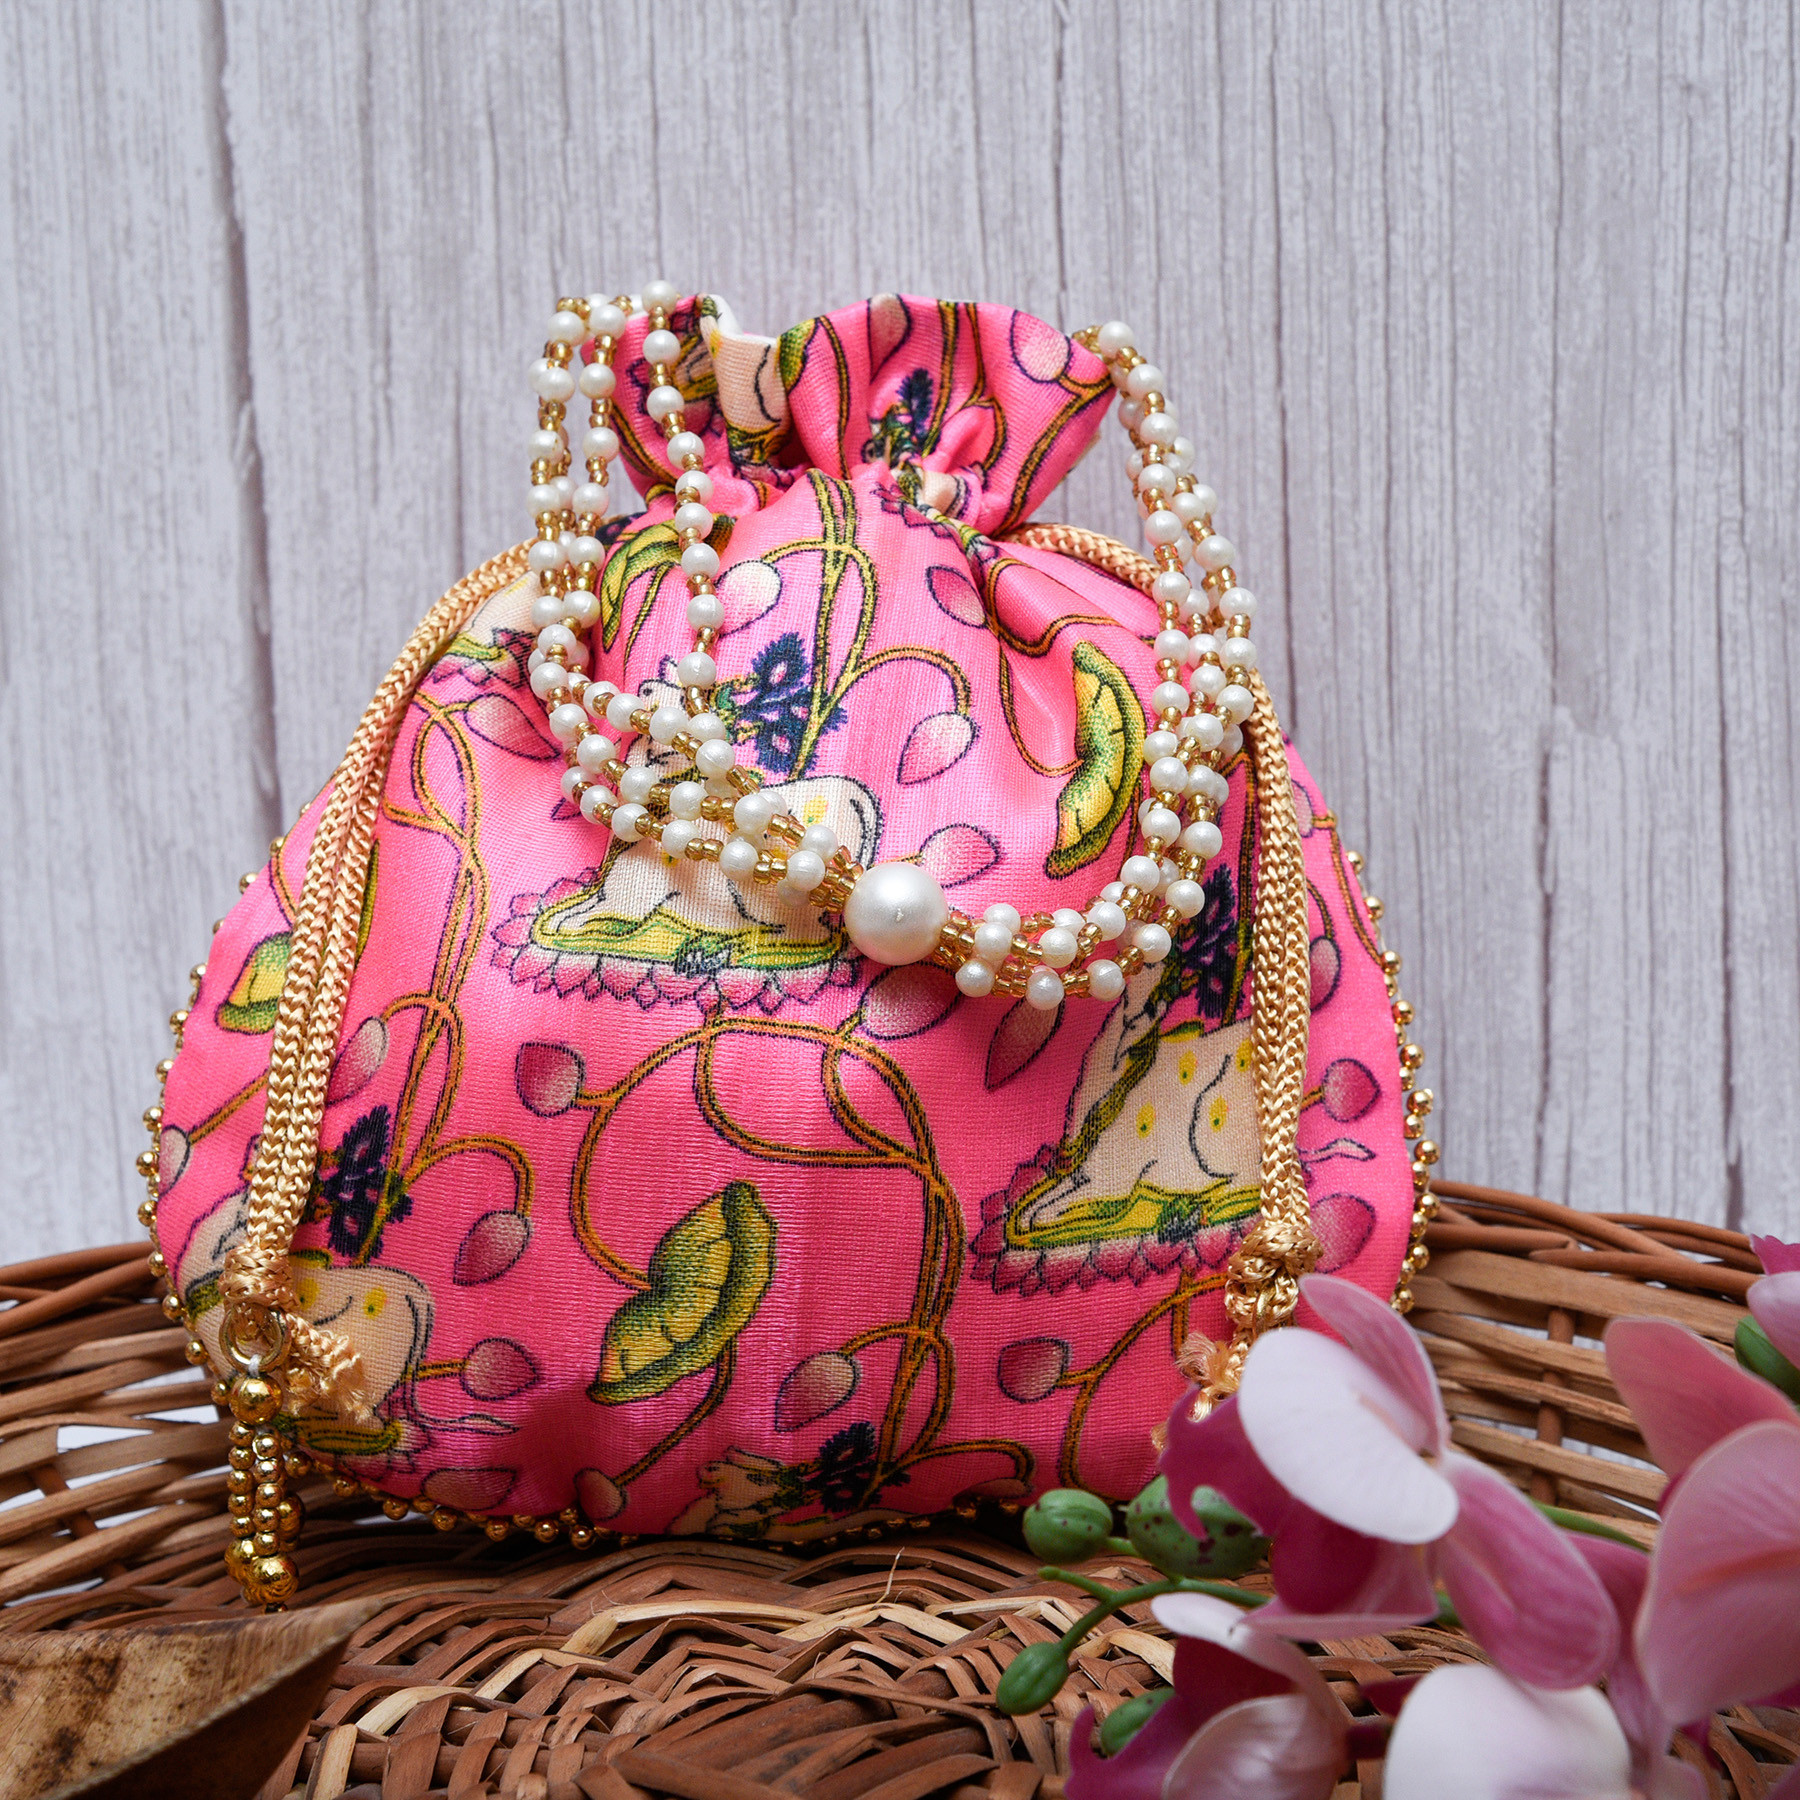 Kuber Industries Potli | Silk Wedding Potli | Wallet Potli | Christmas Gift Potli | Baby Shower Potli | Traditional Shagun Potli | Drawstring with Beads Handle Potli | Cow-Design Patli Potli | Pink